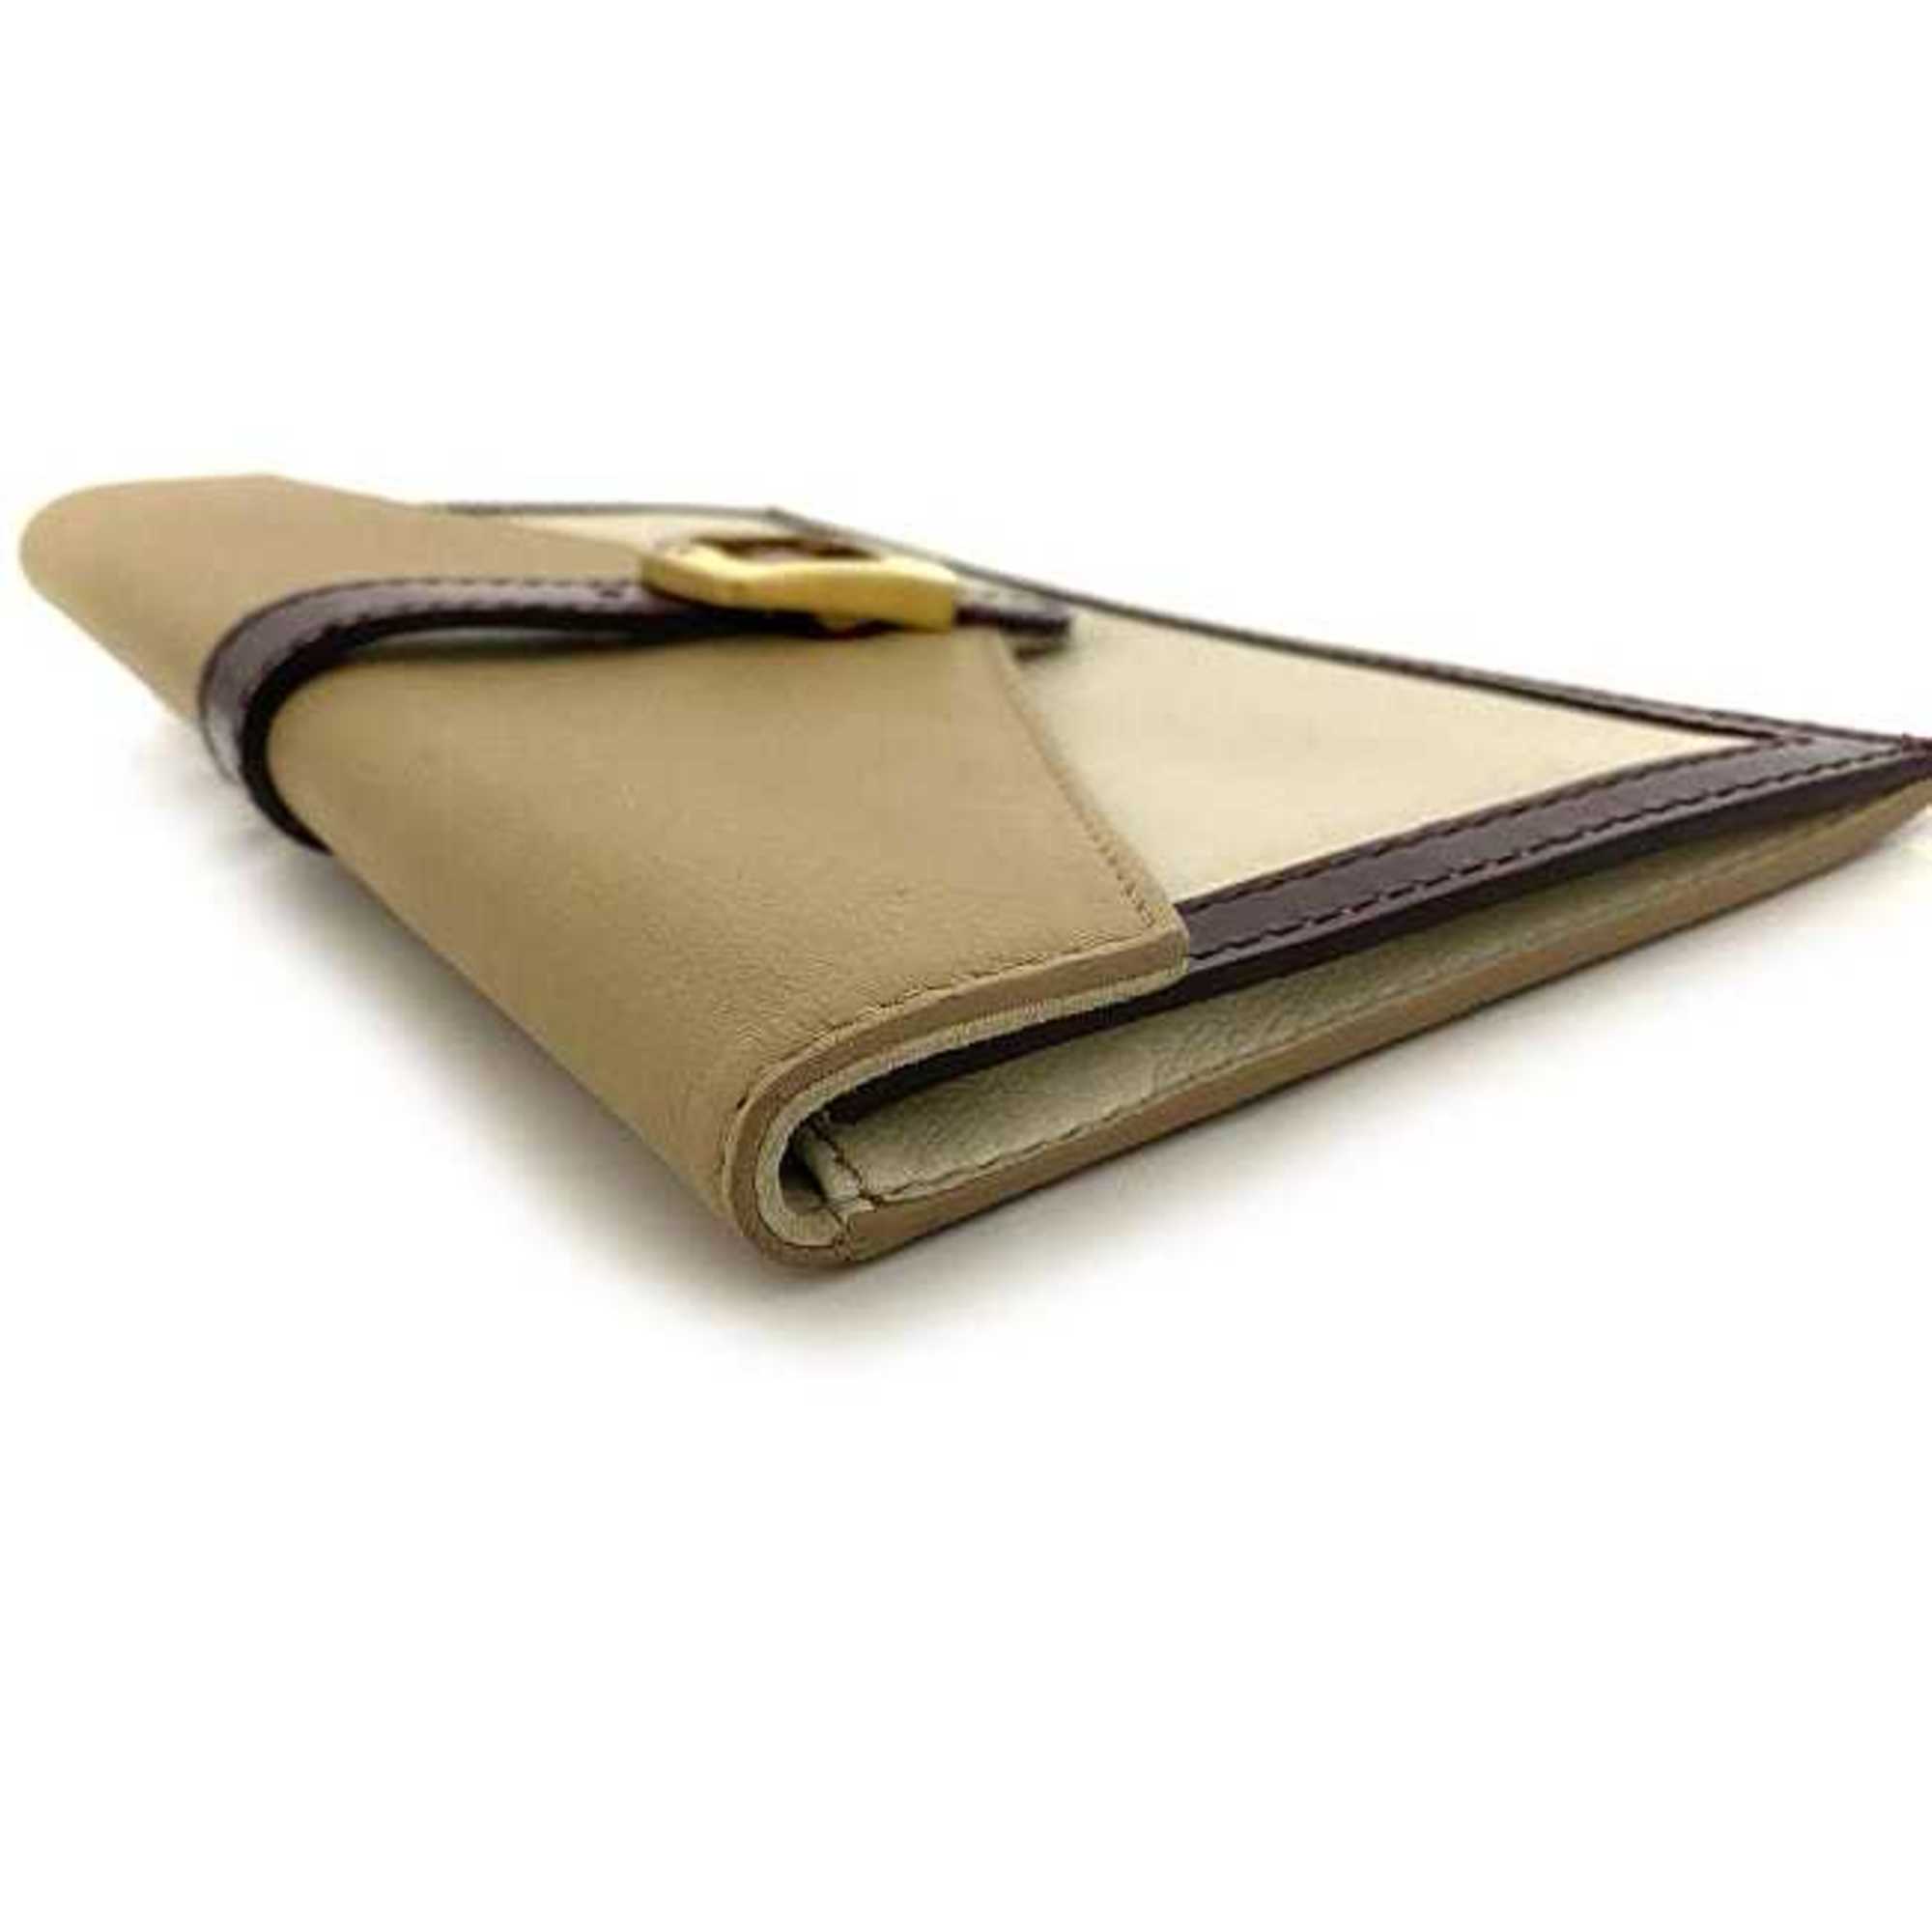 Fendi Bifold Long Wallet White Beige Wine Red Chameleon 8M0283 Patent Leather FENDI Flap Clutch Bag Belt Women's